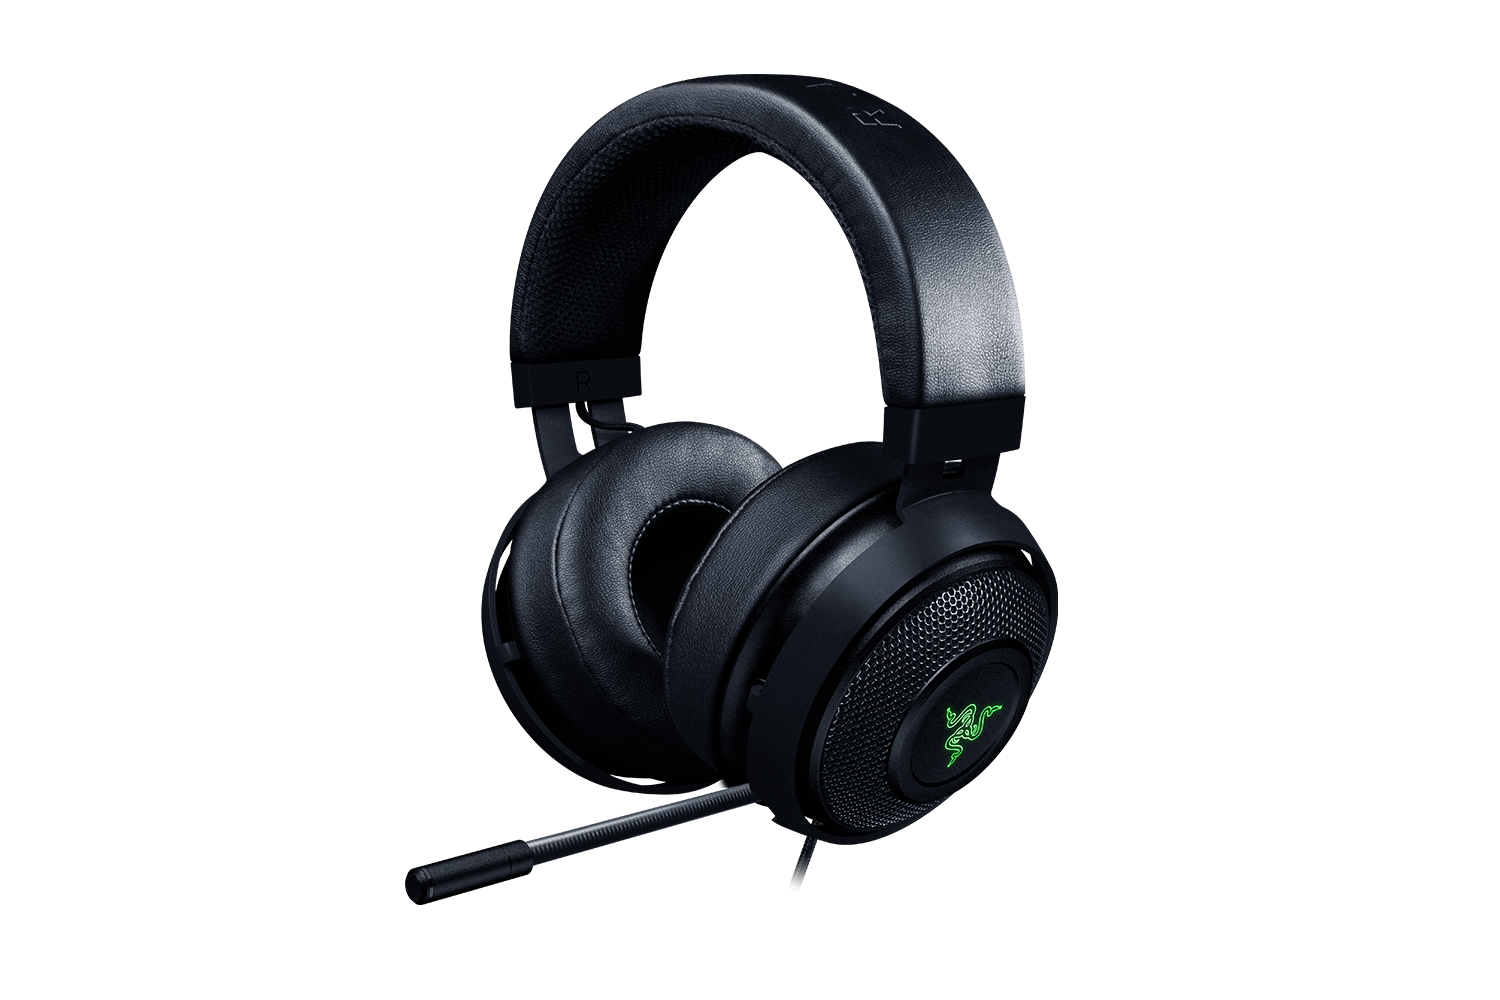 Razer Kraken Pro V2 review: No-fuss gaming headphones - SoundGuys